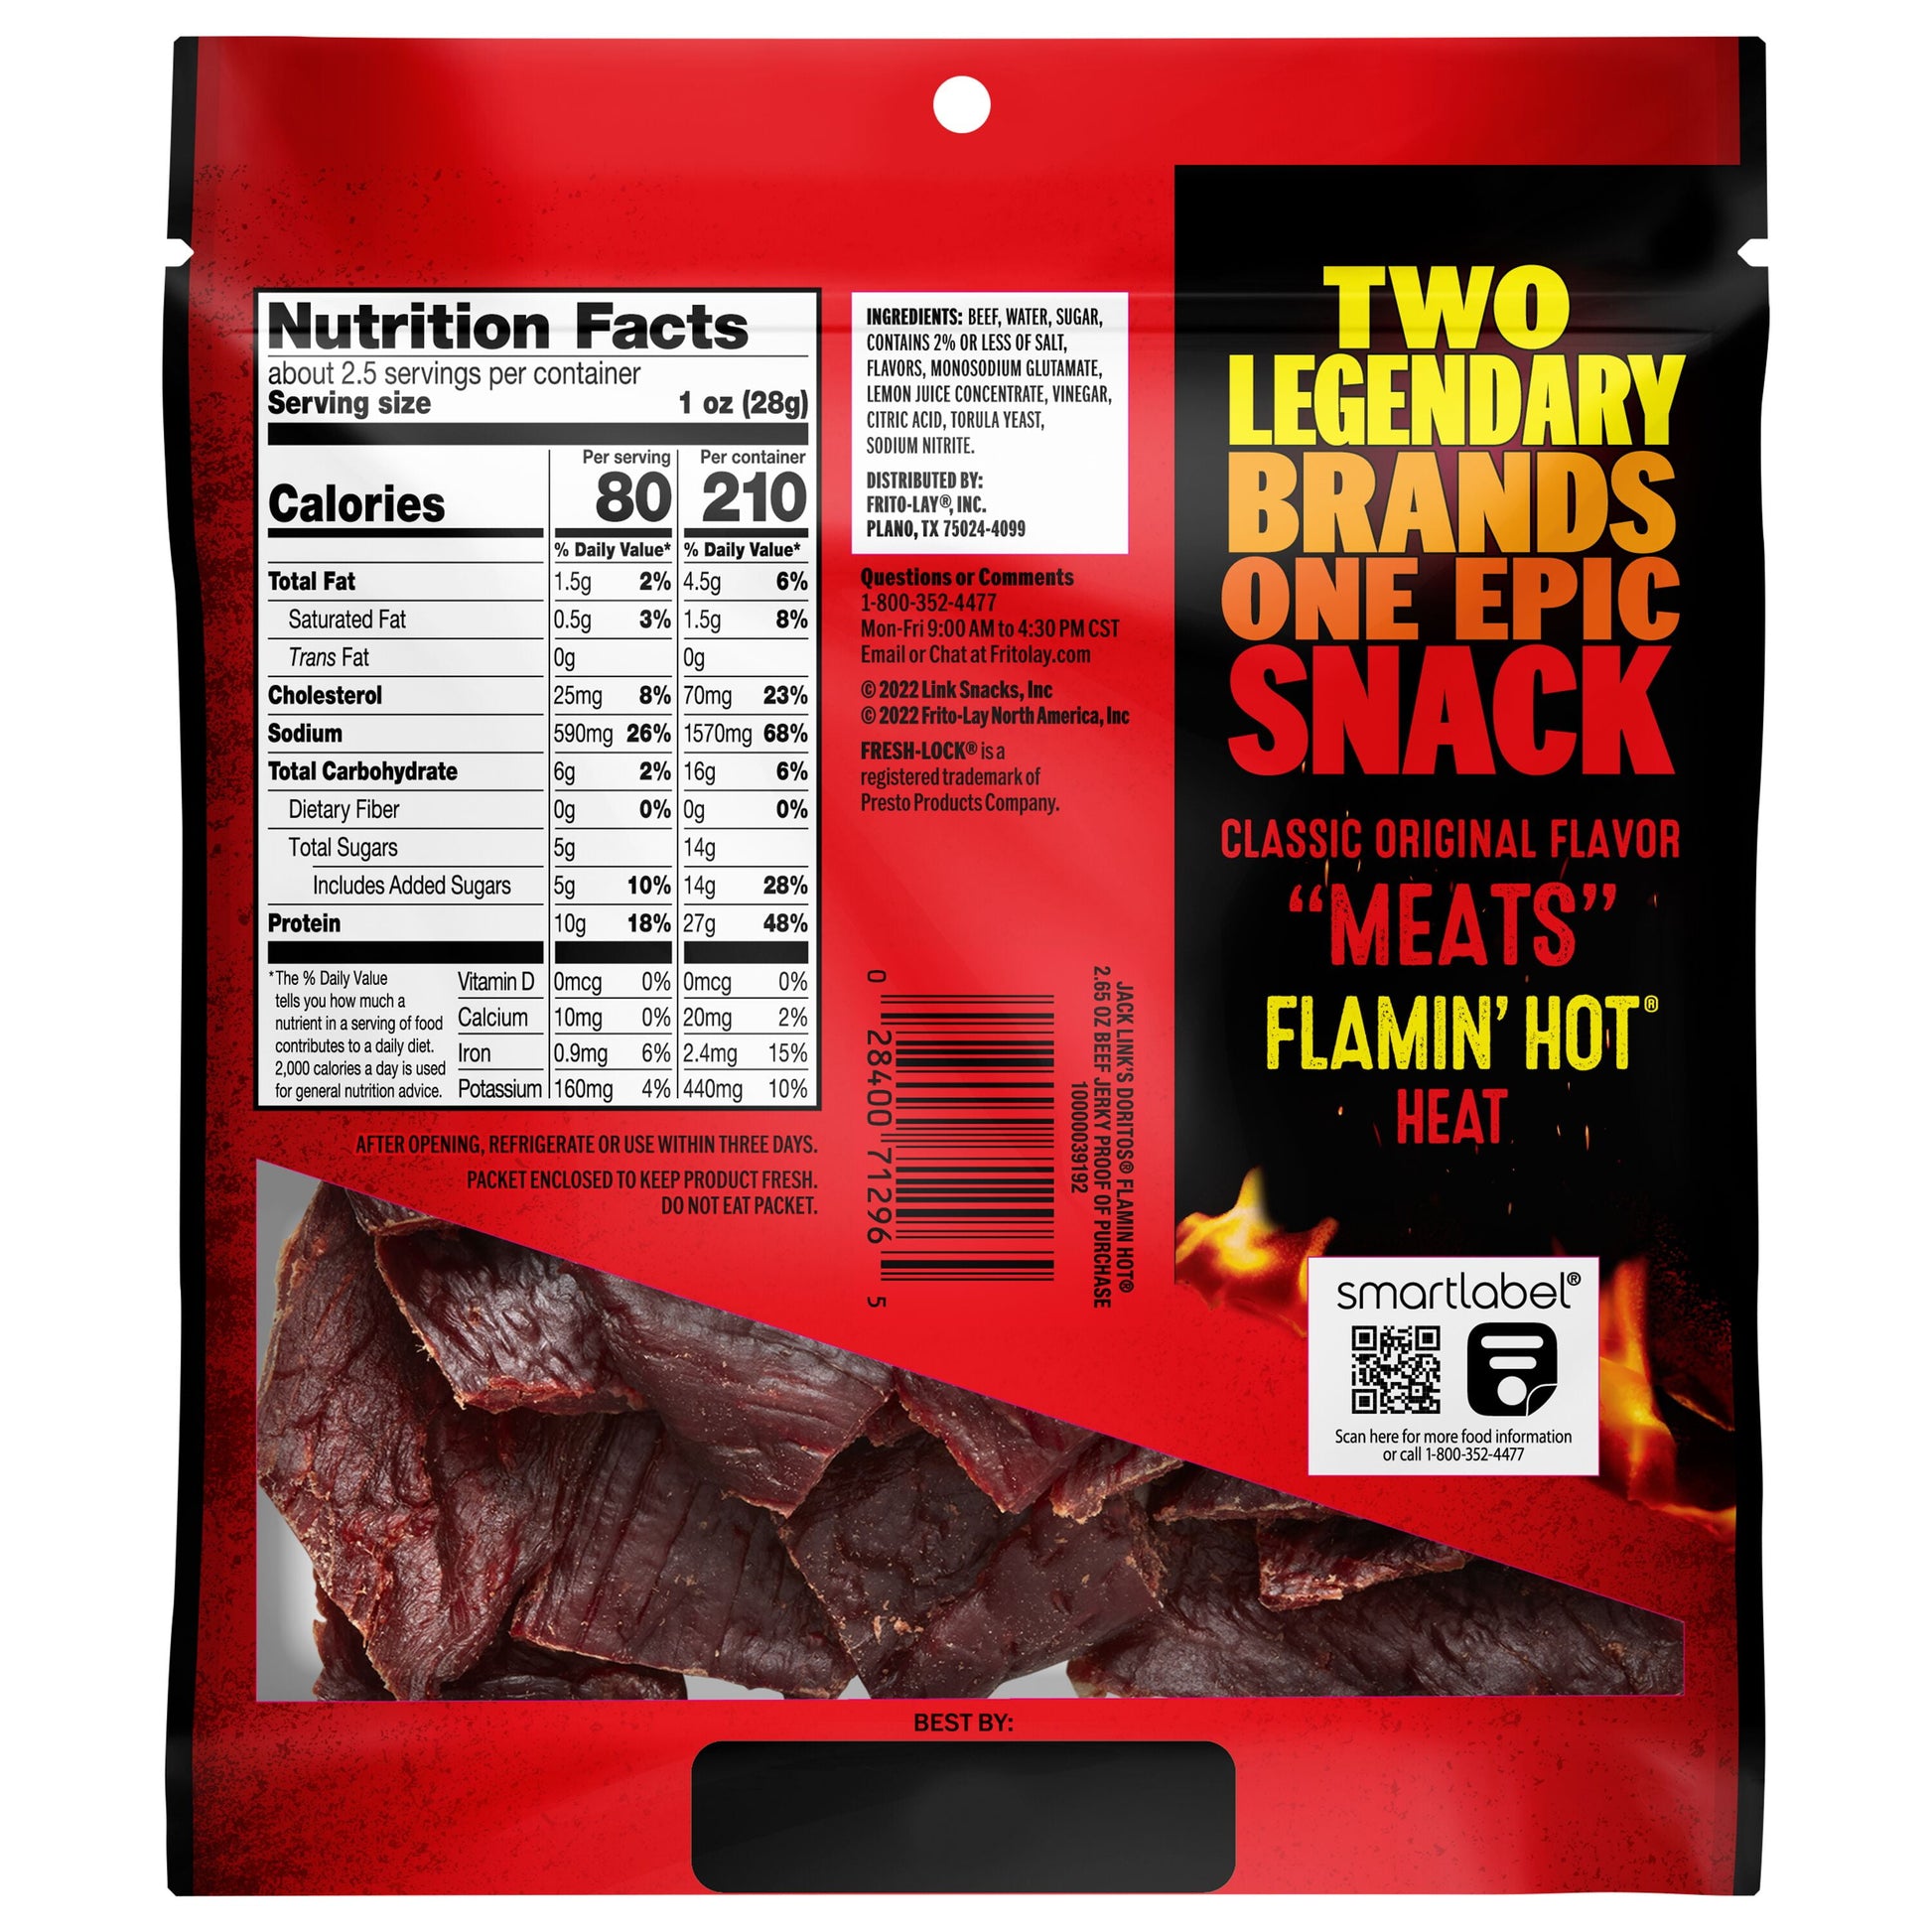 Jack Link’S® Flamin’ Hot® Flavored Original Beef Jerky & Dried Meats, 2.65 Oz Bag